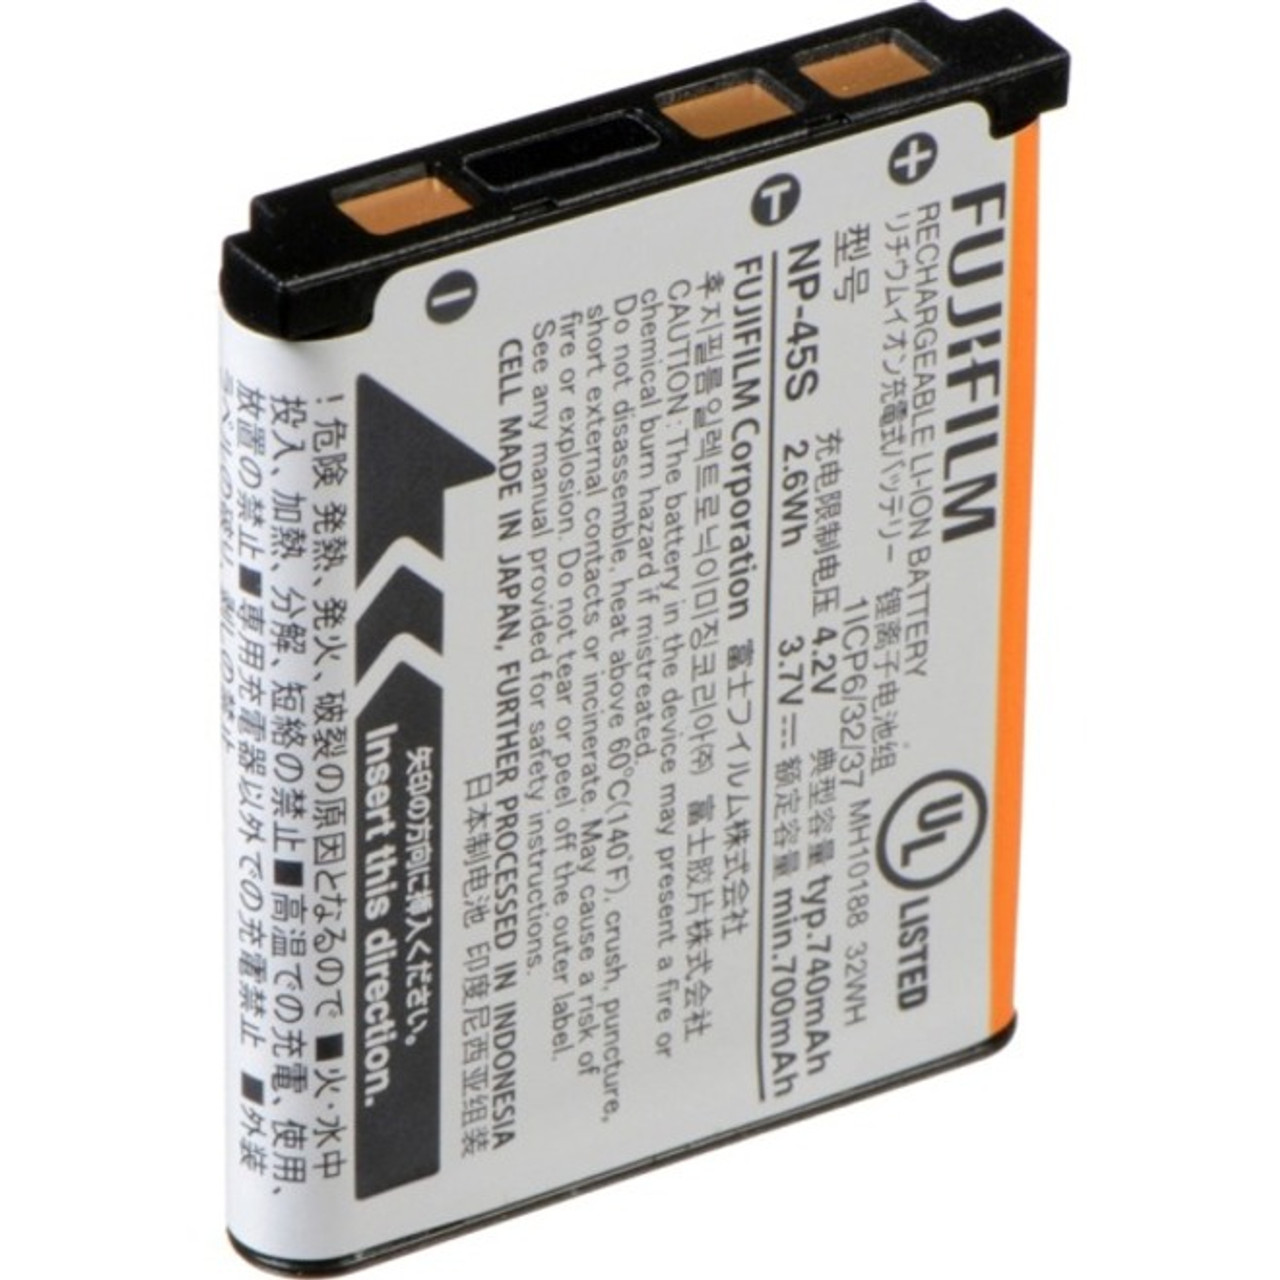 Fujifilm NP-45S Battery